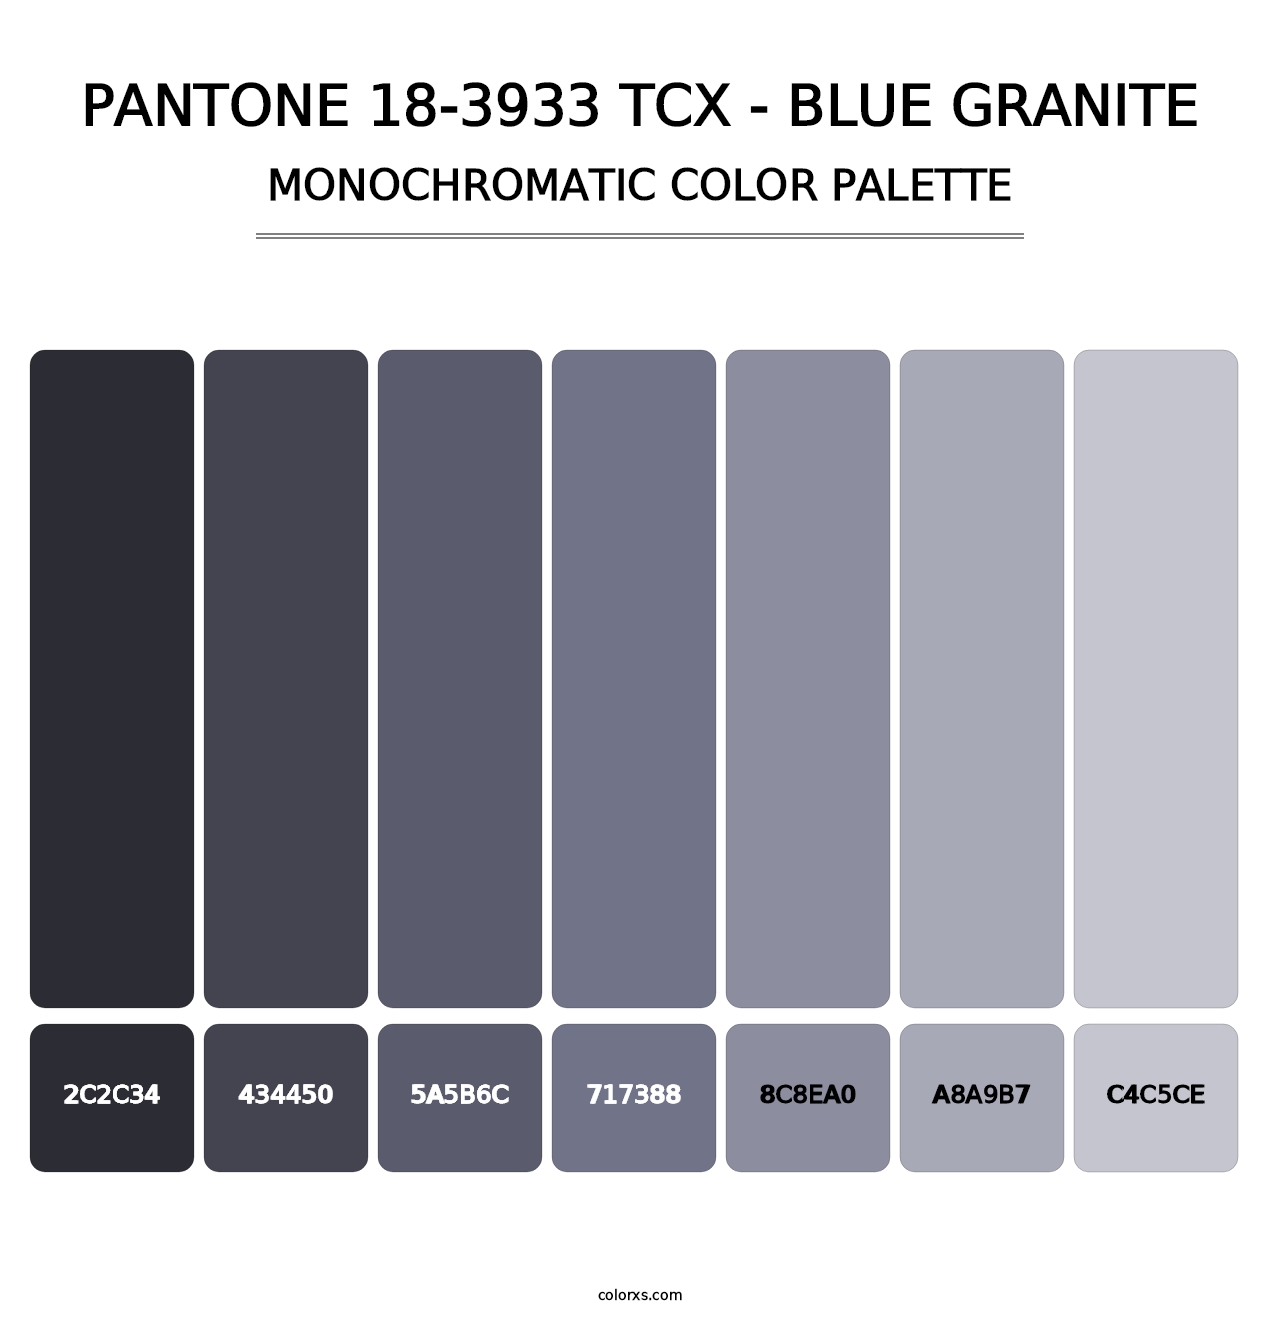 PANTONE 18-3933 TCX - Blue Granite - Monochromatic Color Palette